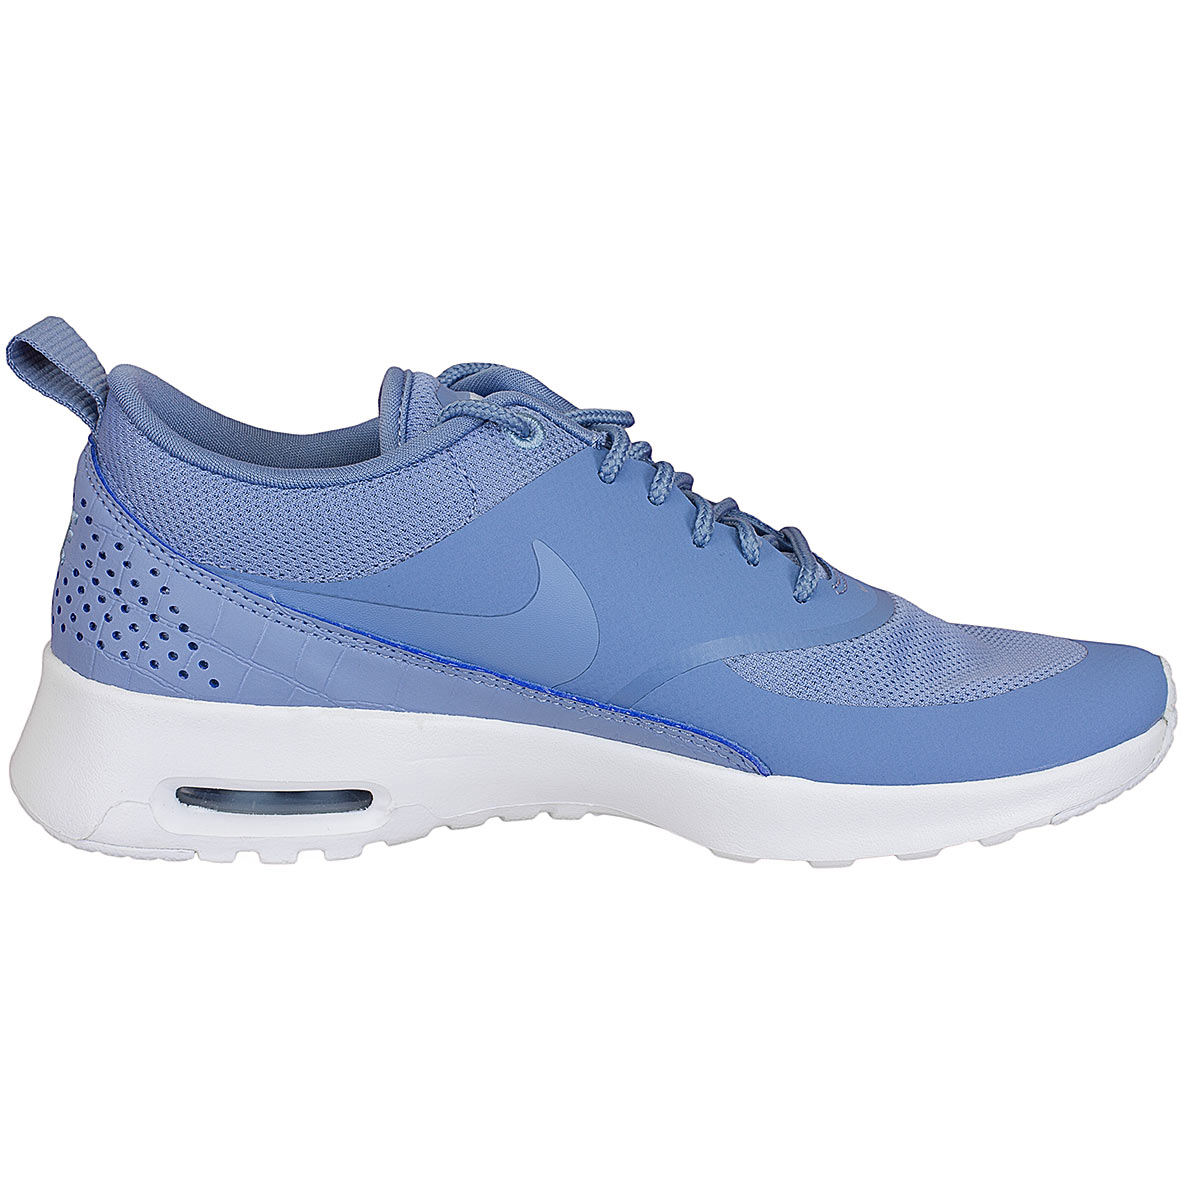 ☆ Nike Damen Sneaker Air Max Thea blau - hier bestellen!